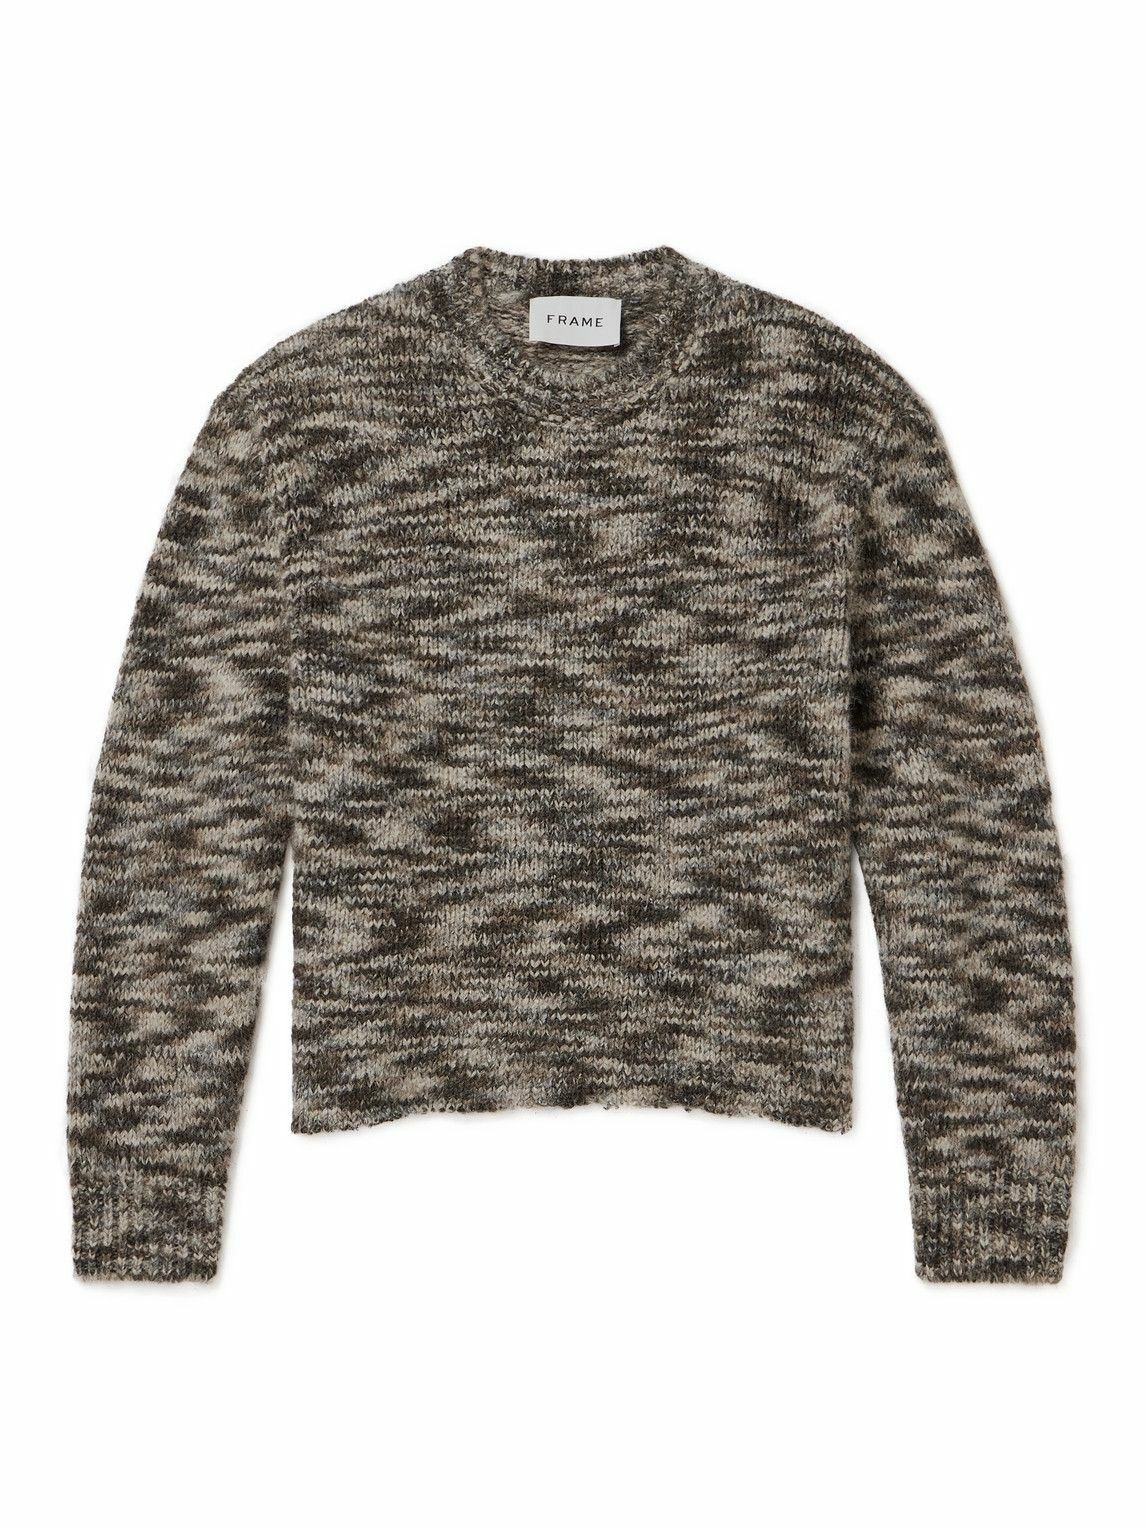 FRAME - Knitted Sweater - Brown Frame Denim